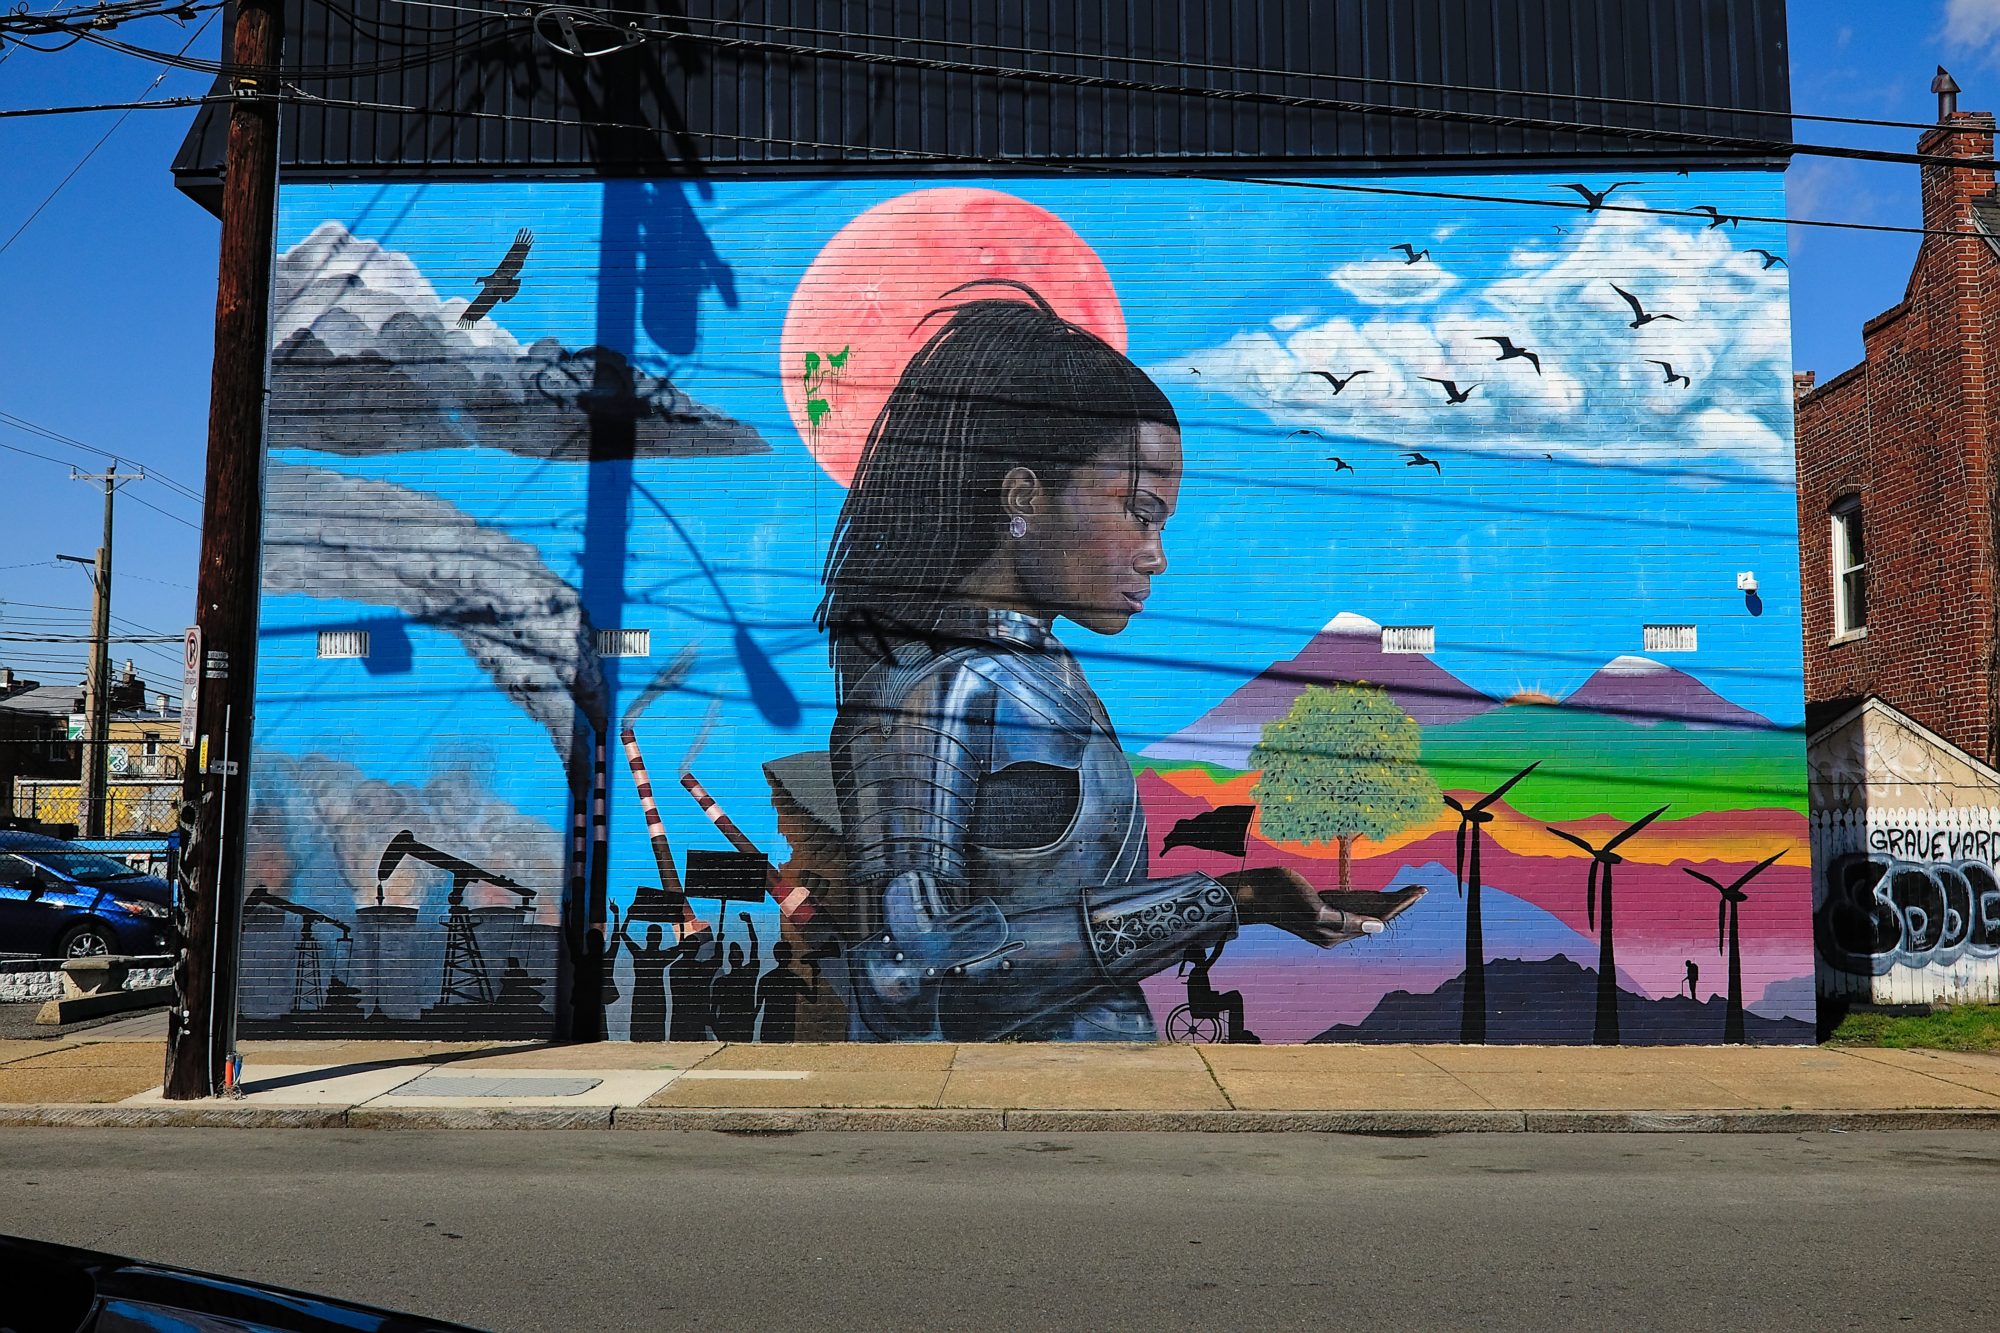 A vibrant mural in Richmond